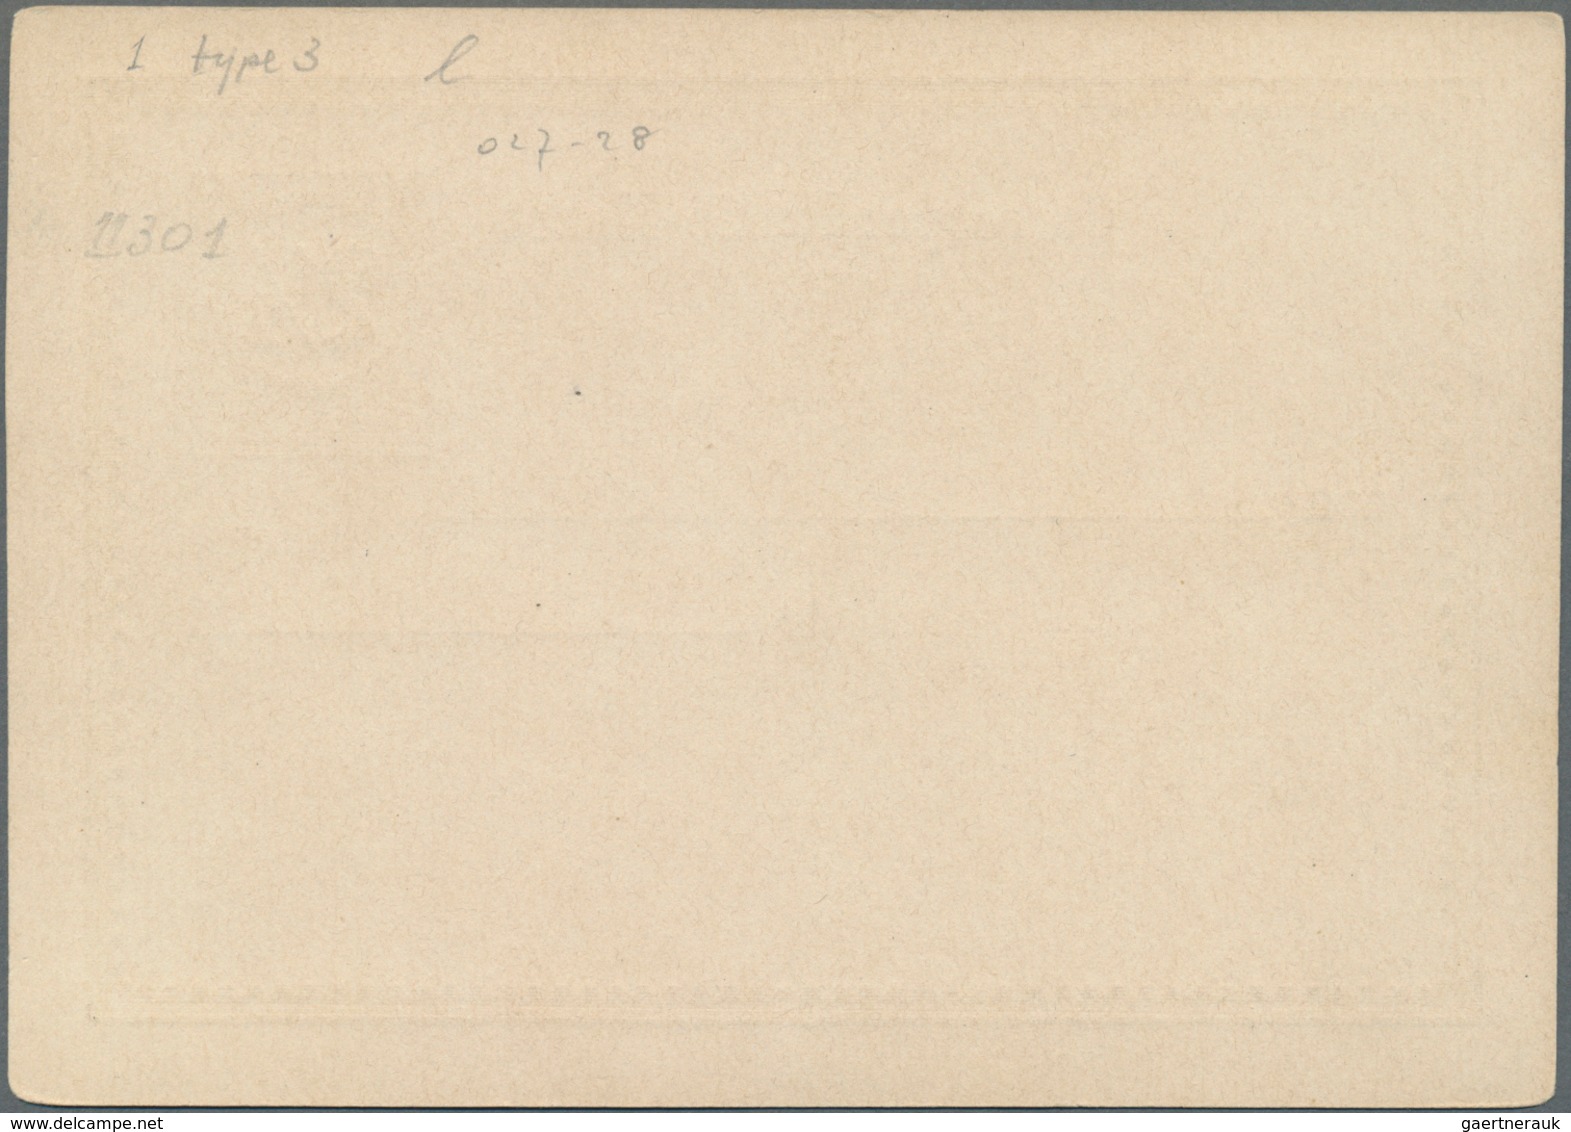 Niederlande - Ganzsachen: 1870, Five Proofs For A 2 1/2 Stationery Card. Seldomly Seen. - Postal Stationery